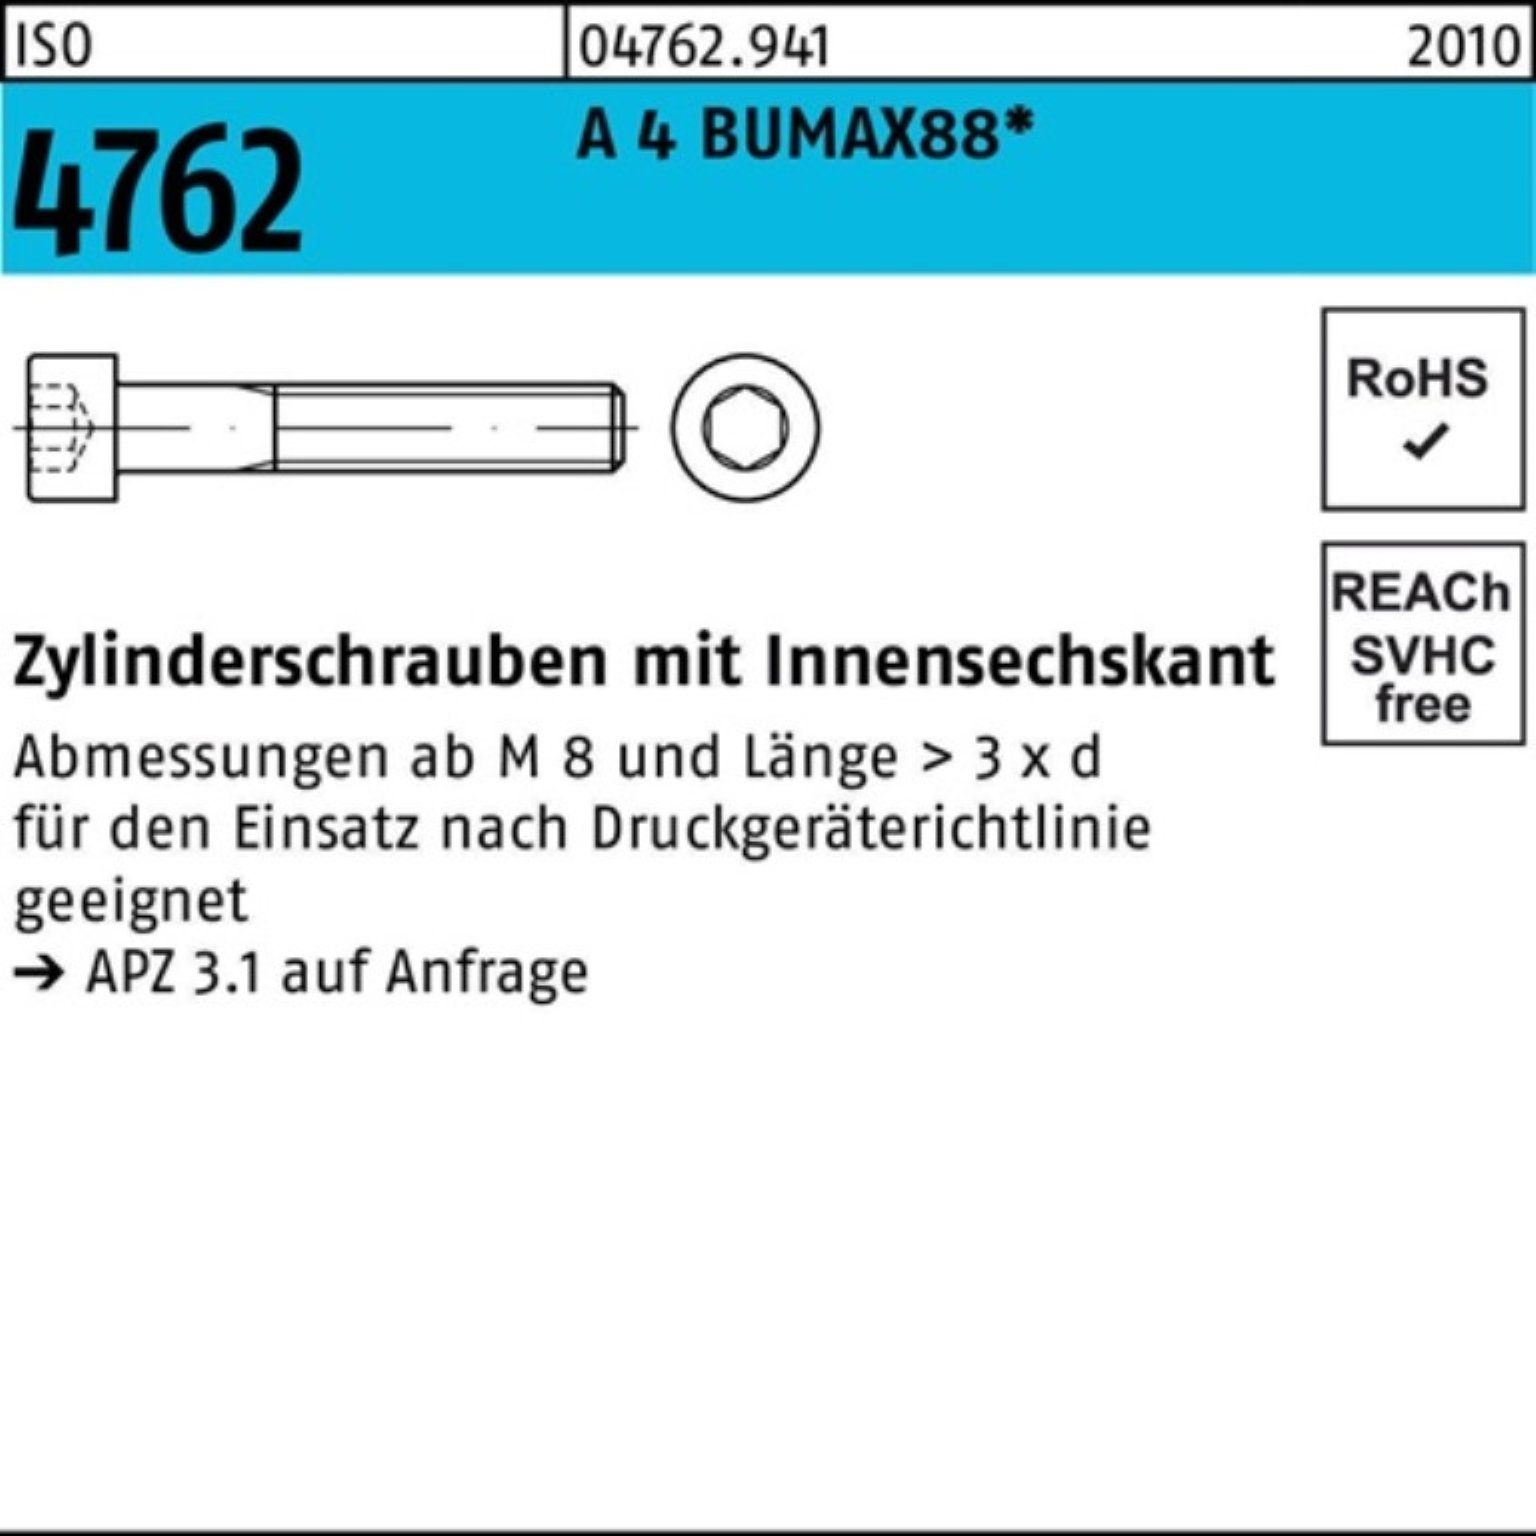 4762 4 ISO A 30 200er Zylinderschraube Innen-6kt Bufab BUMAX88 Zylinderschraube Pack 200 M4x